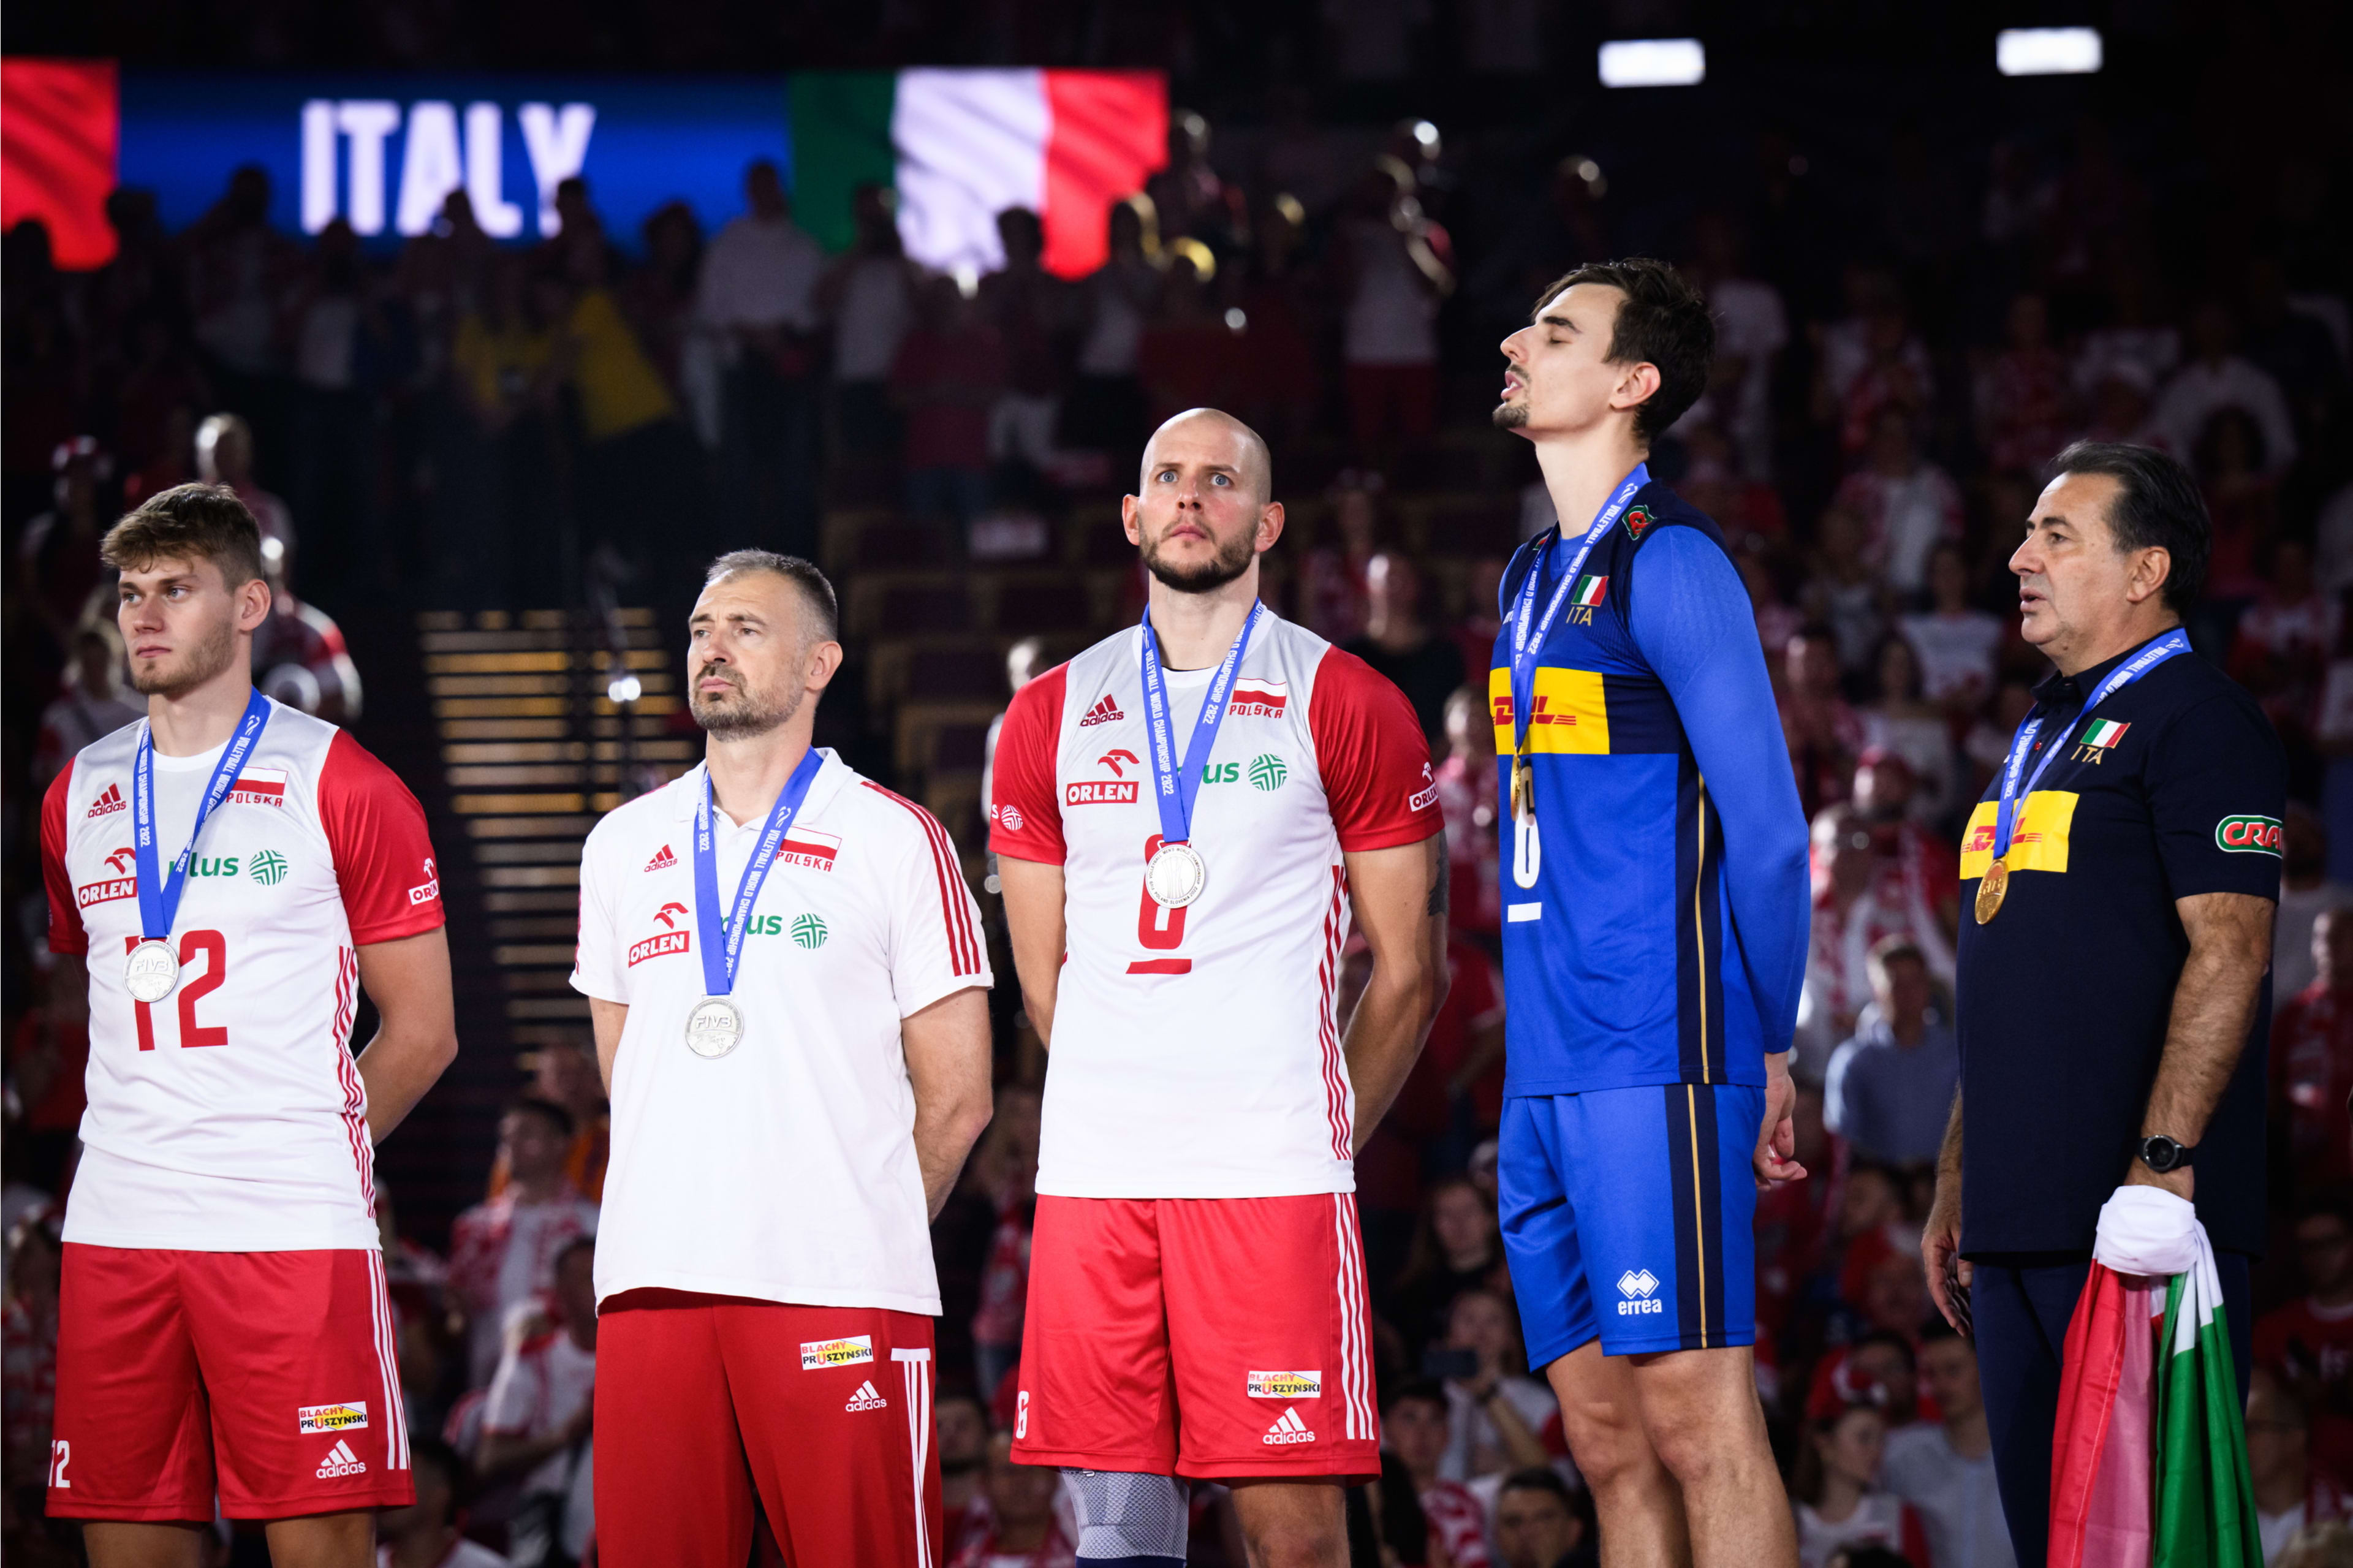 2022 FIVB Volleyball Men's World Championship - Wikipedia